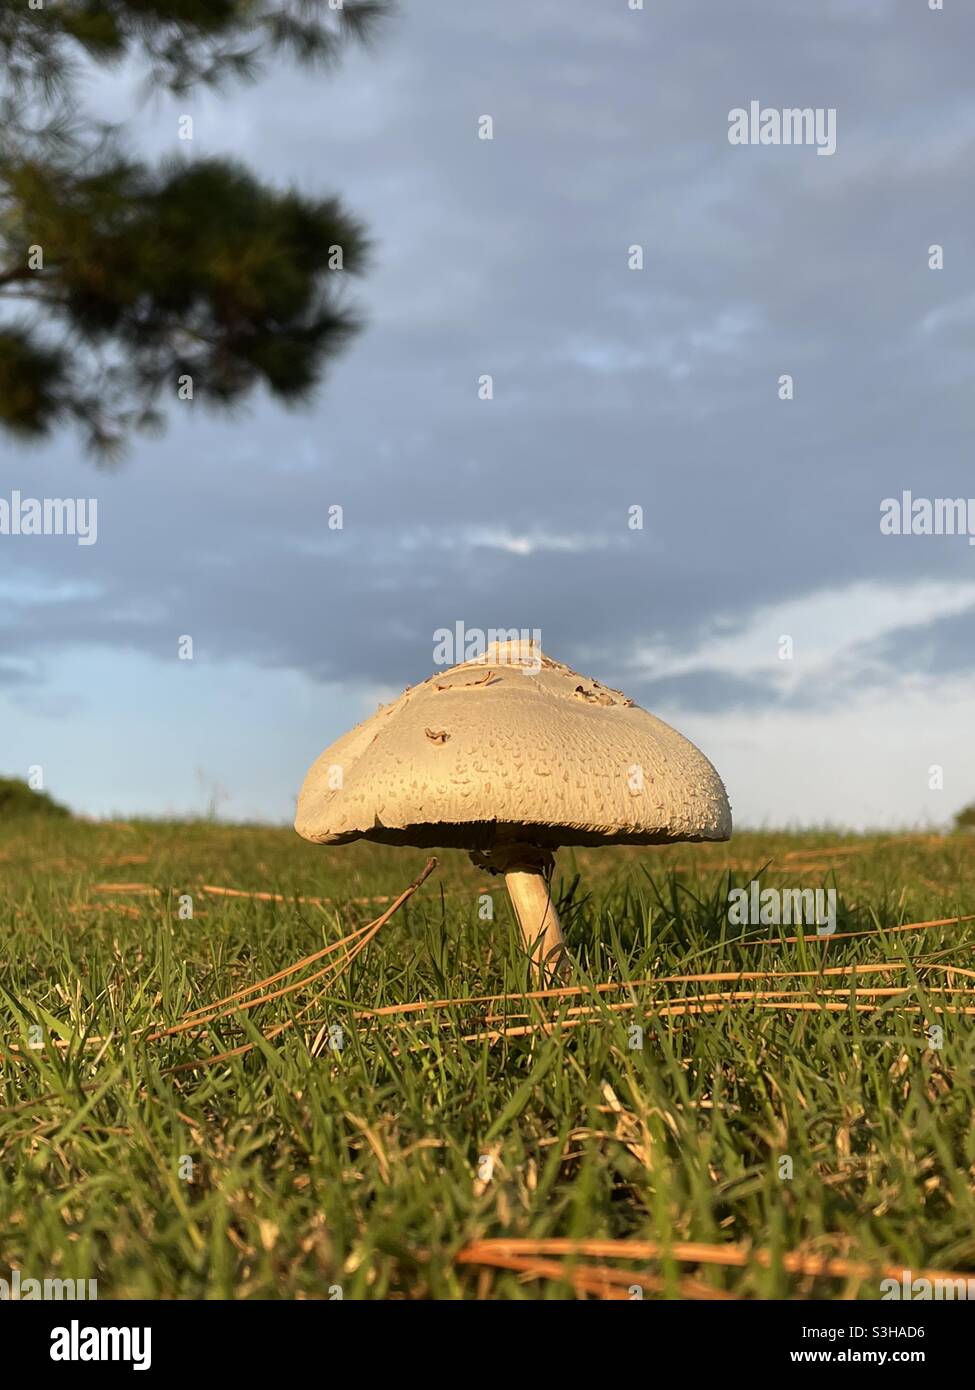 Large mushroom with evening sun glow on landscape Stock Photo